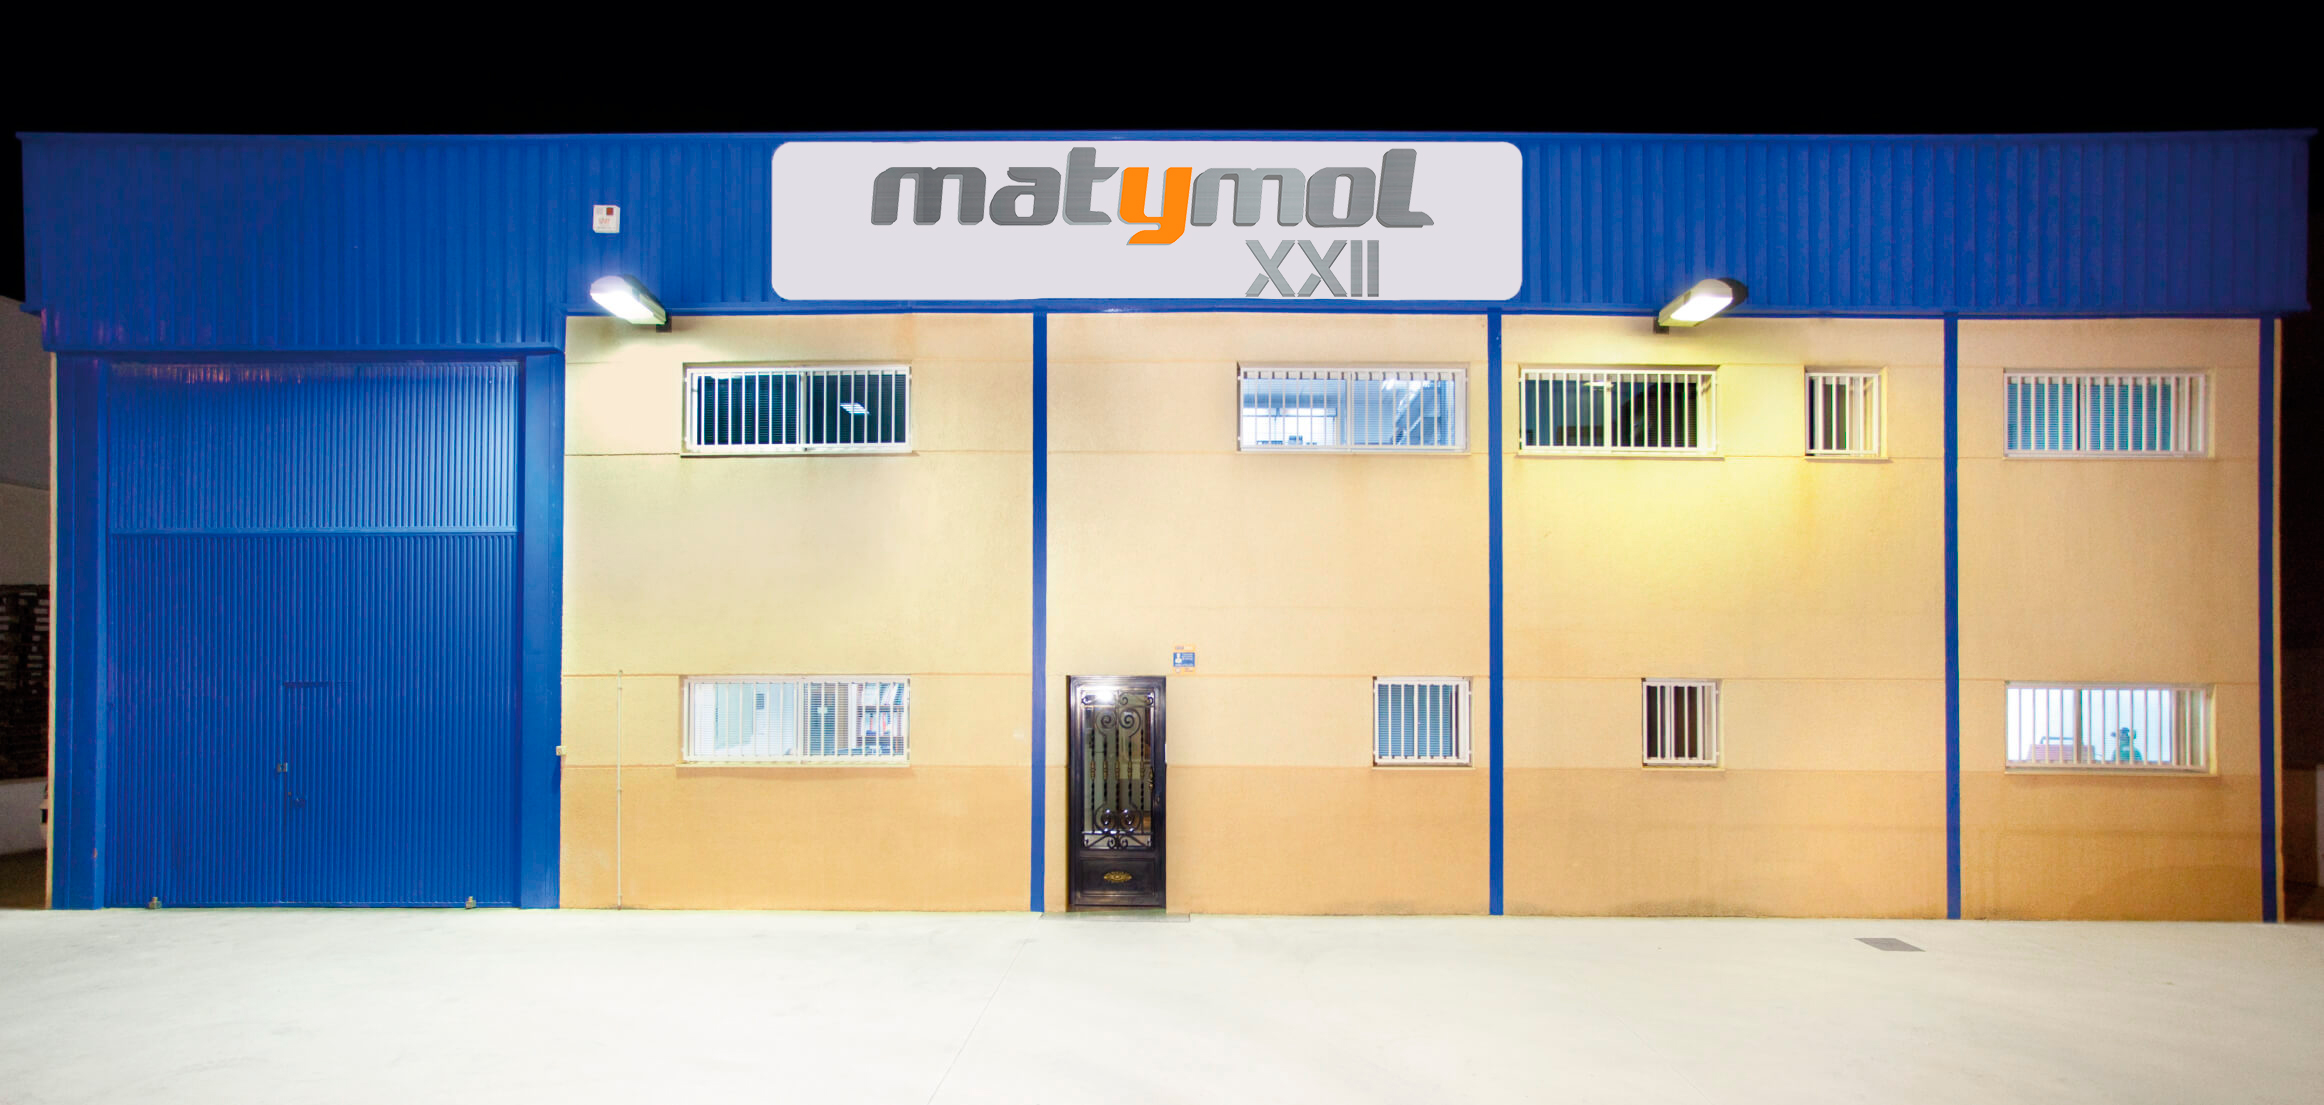 Matymol fabricantes de moldes para inyección de termoplásticos